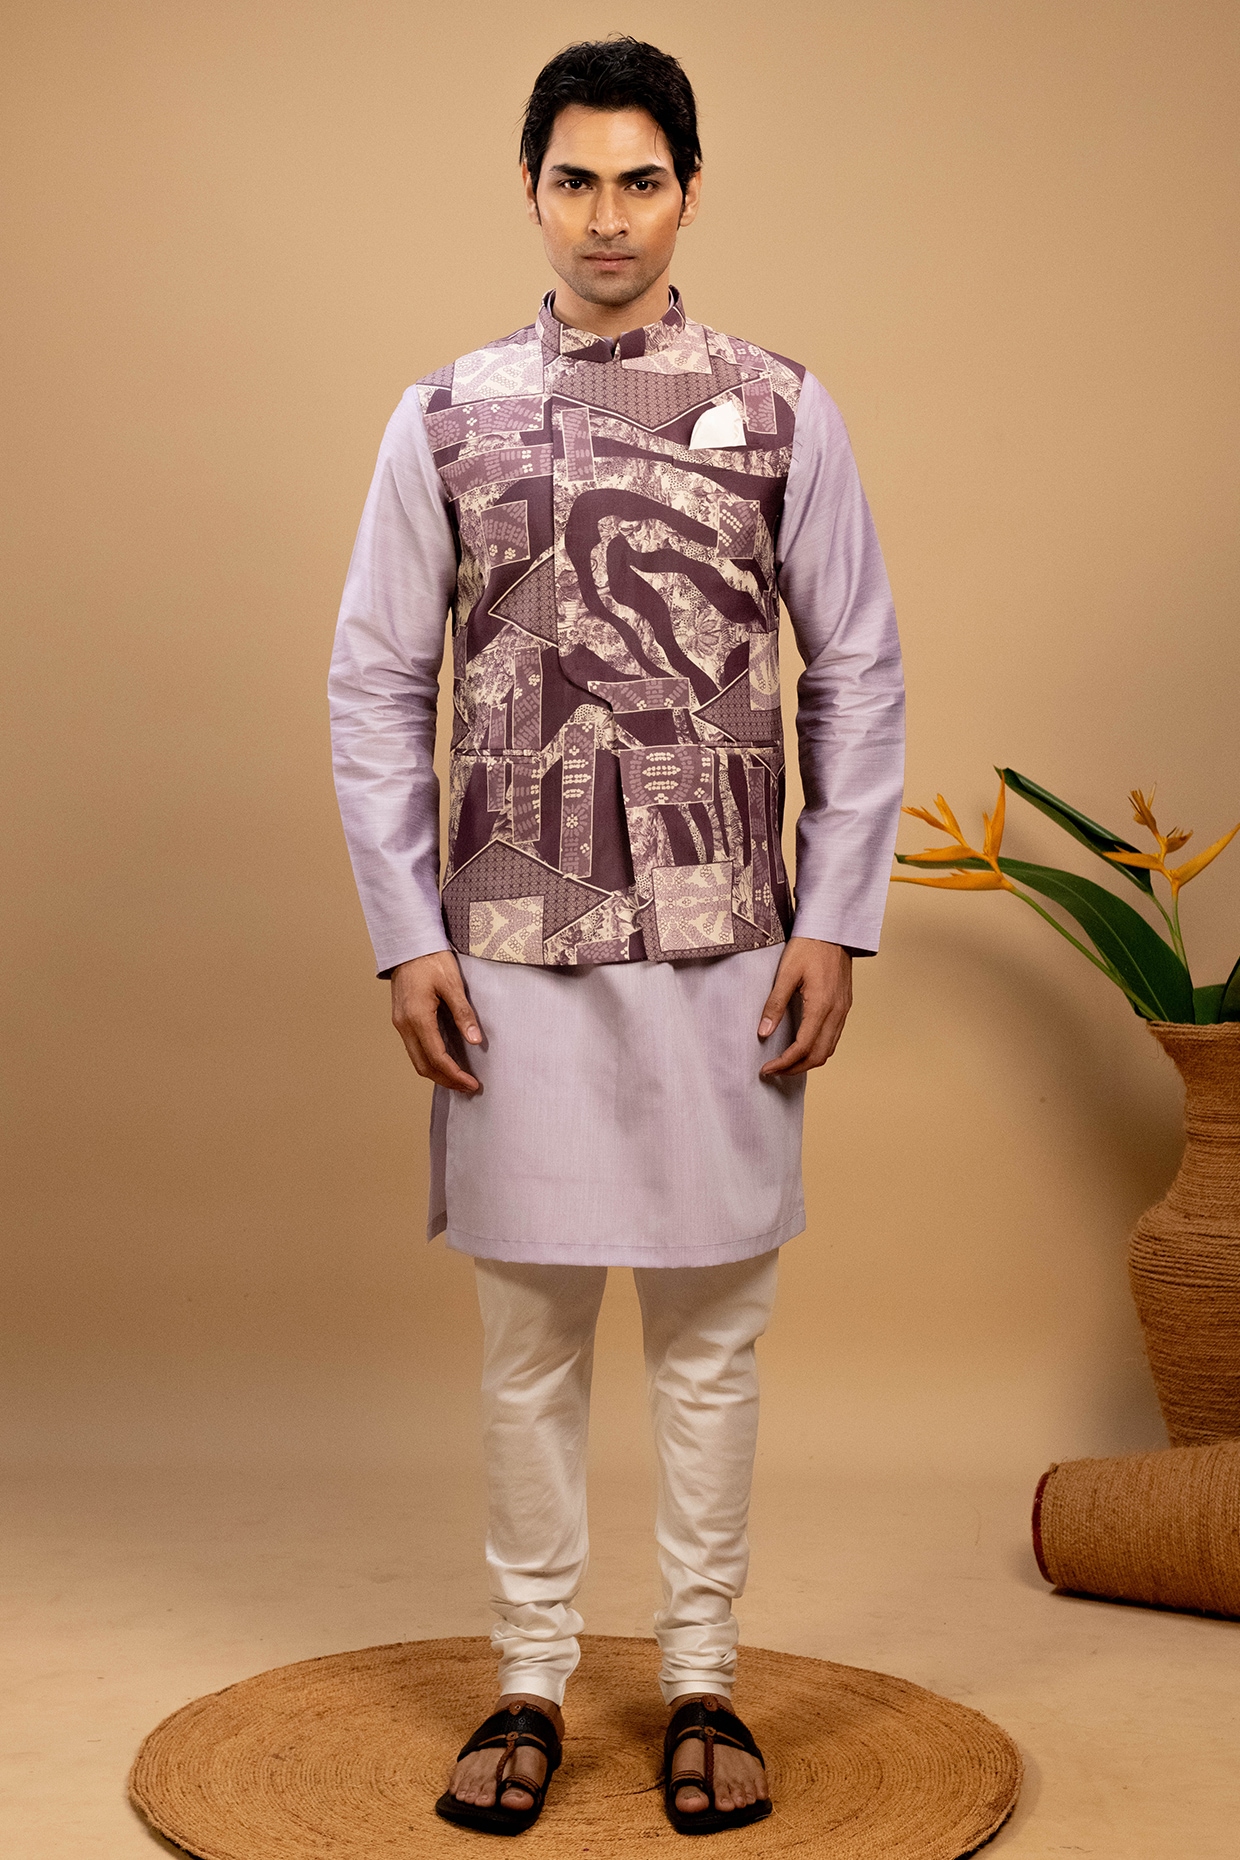 Printed Textured Nehru Jacket for Man, Modi Jacket for Men, Ethnic Nehru  Jacket | eBay